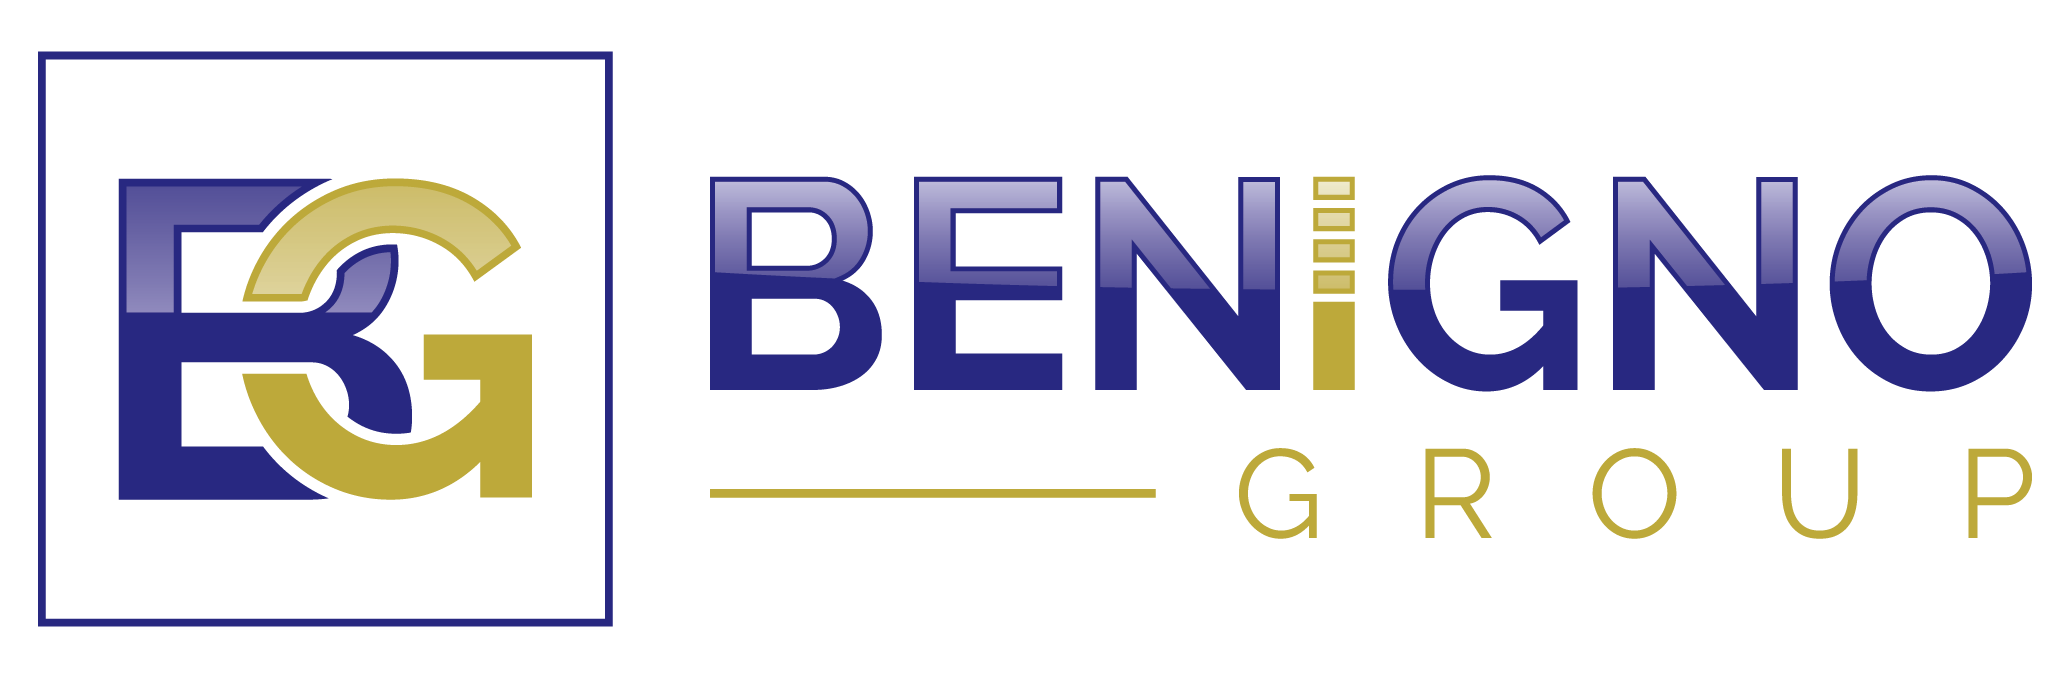 benigno Logo.png